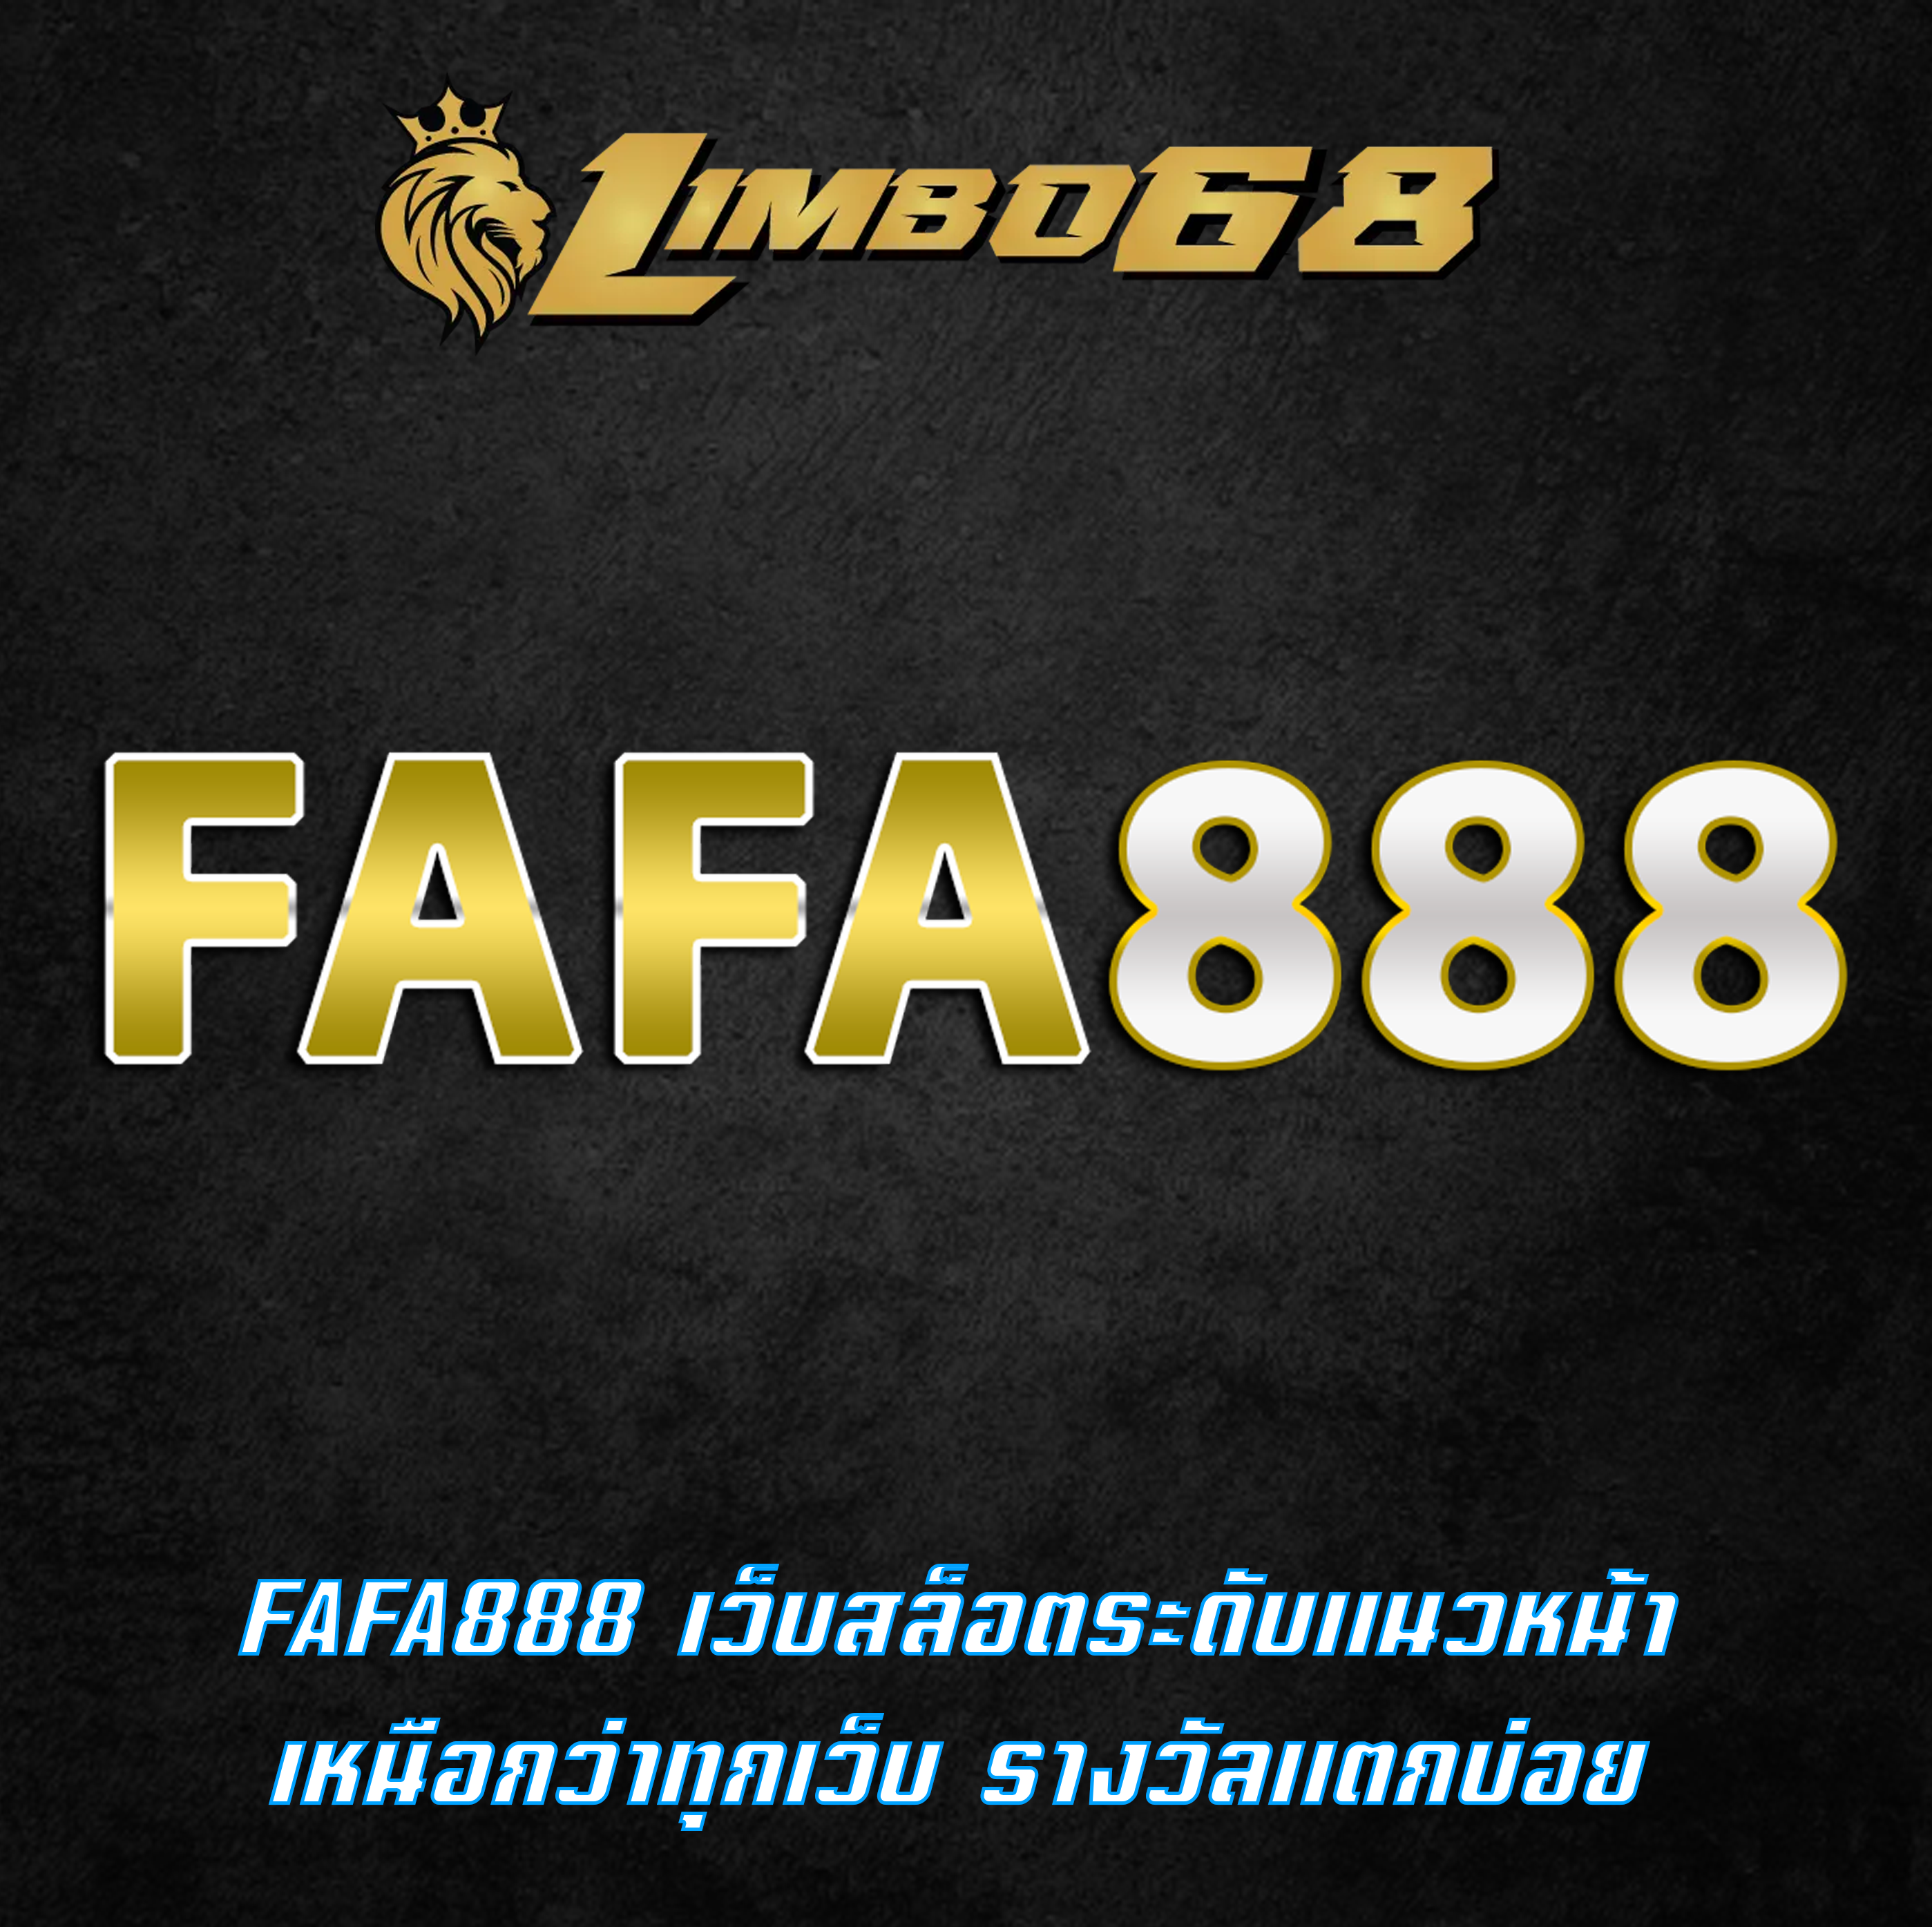 FAFA888 เว็บสล็อตระดับแนวหน้า เหนือกว่าทุกเว็บ รางวัลแตกบ่อย